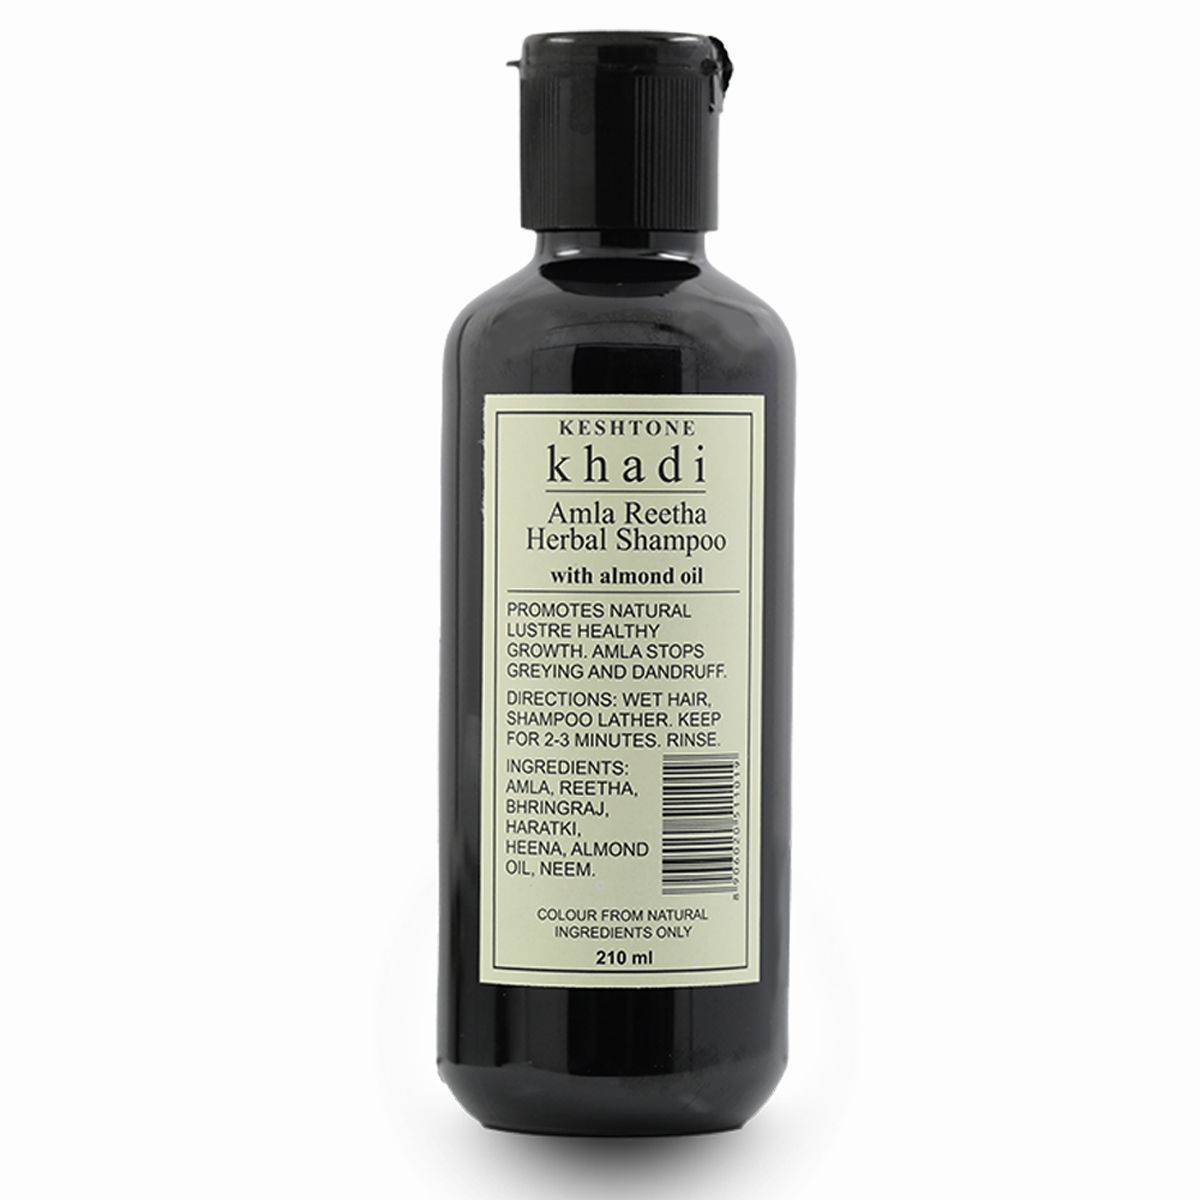 Khadi Amla Reetha Herbal Shampoo, 210 ml Price, Uses, Side Effects,  Composition - Apollo Pharmacy